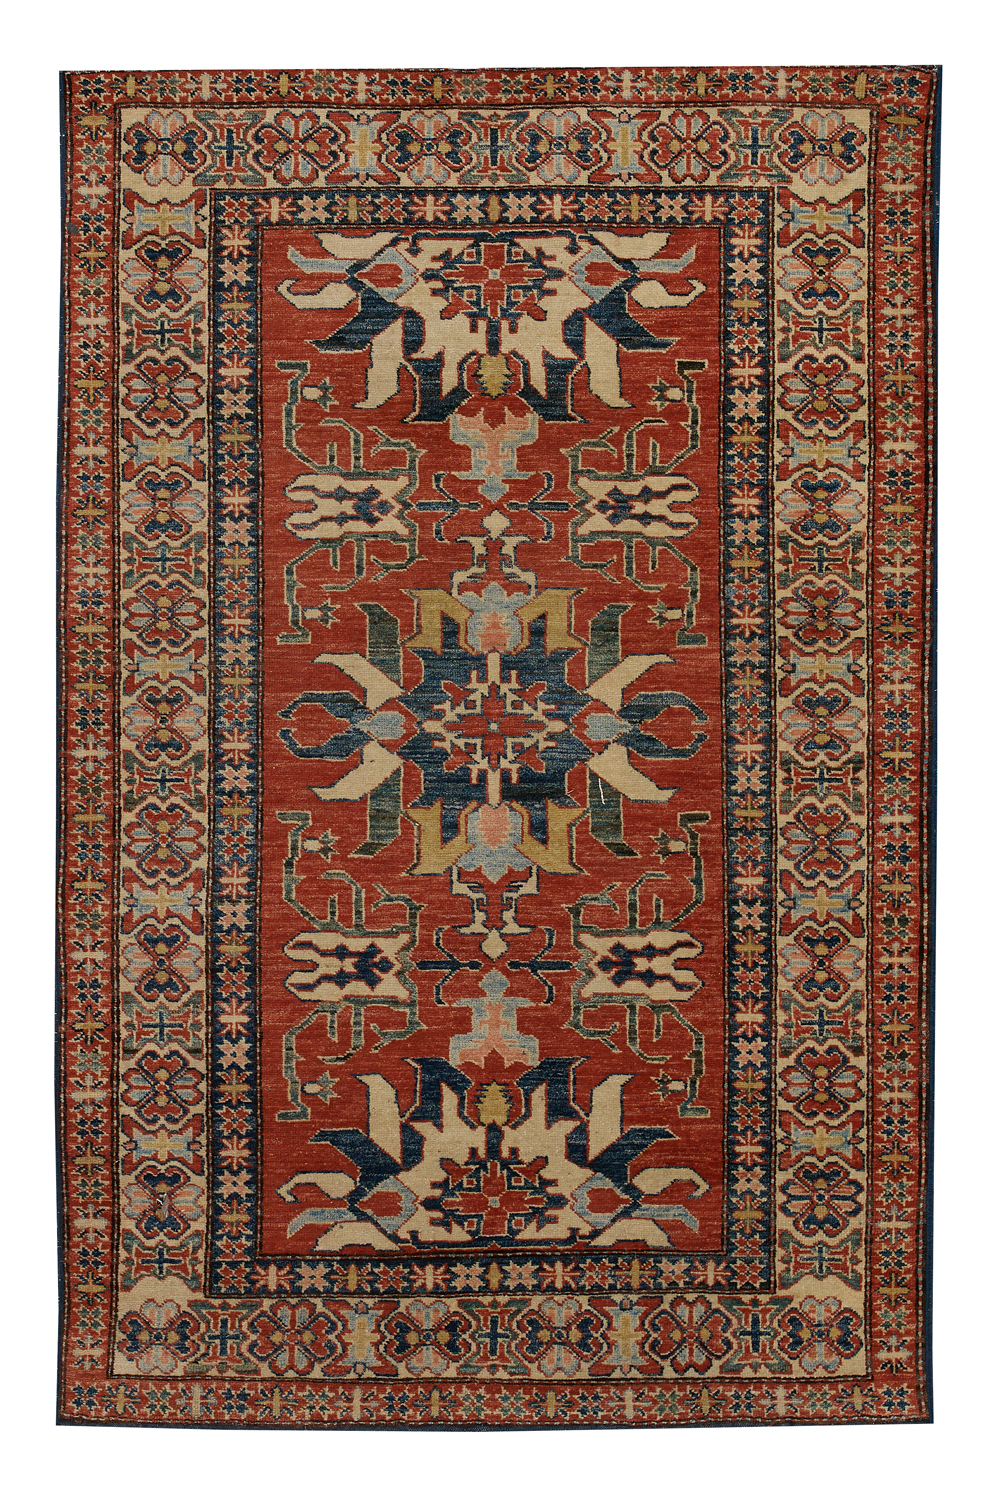 Two Uzbek Kazak Carpets - Image 2 of 3